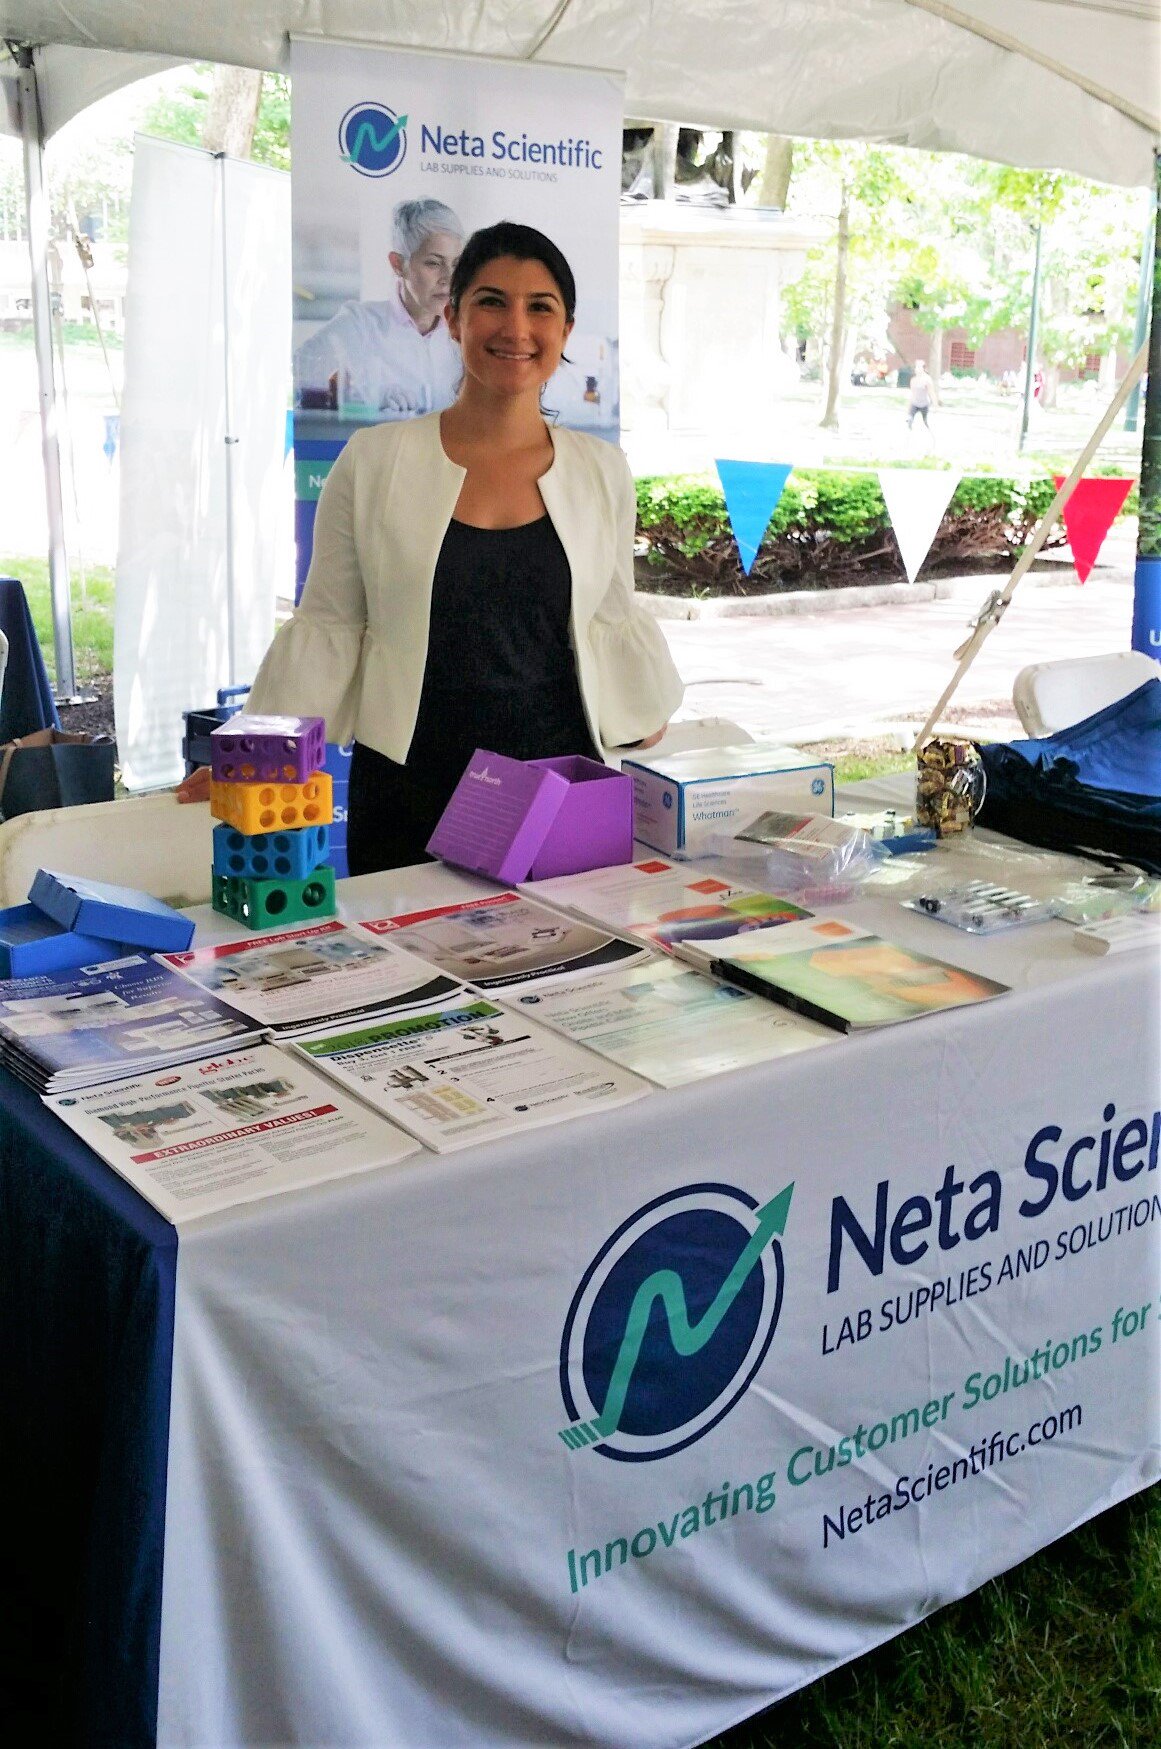 Neta Scientific Lab Supplies and Solutions